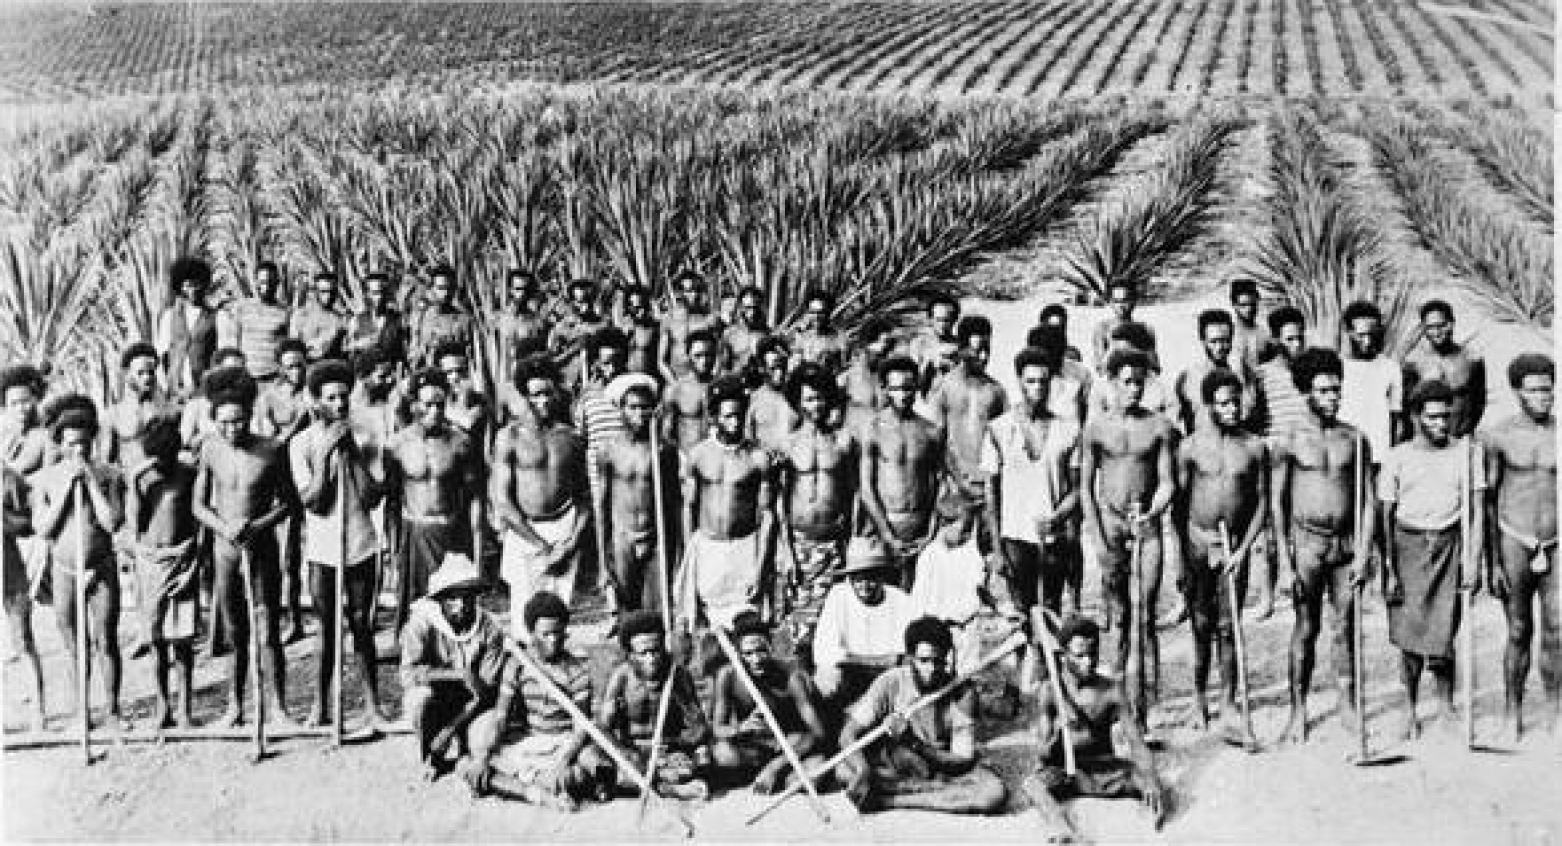 South Sea islander labourers on a Queensland pineapple plantation, 1890s